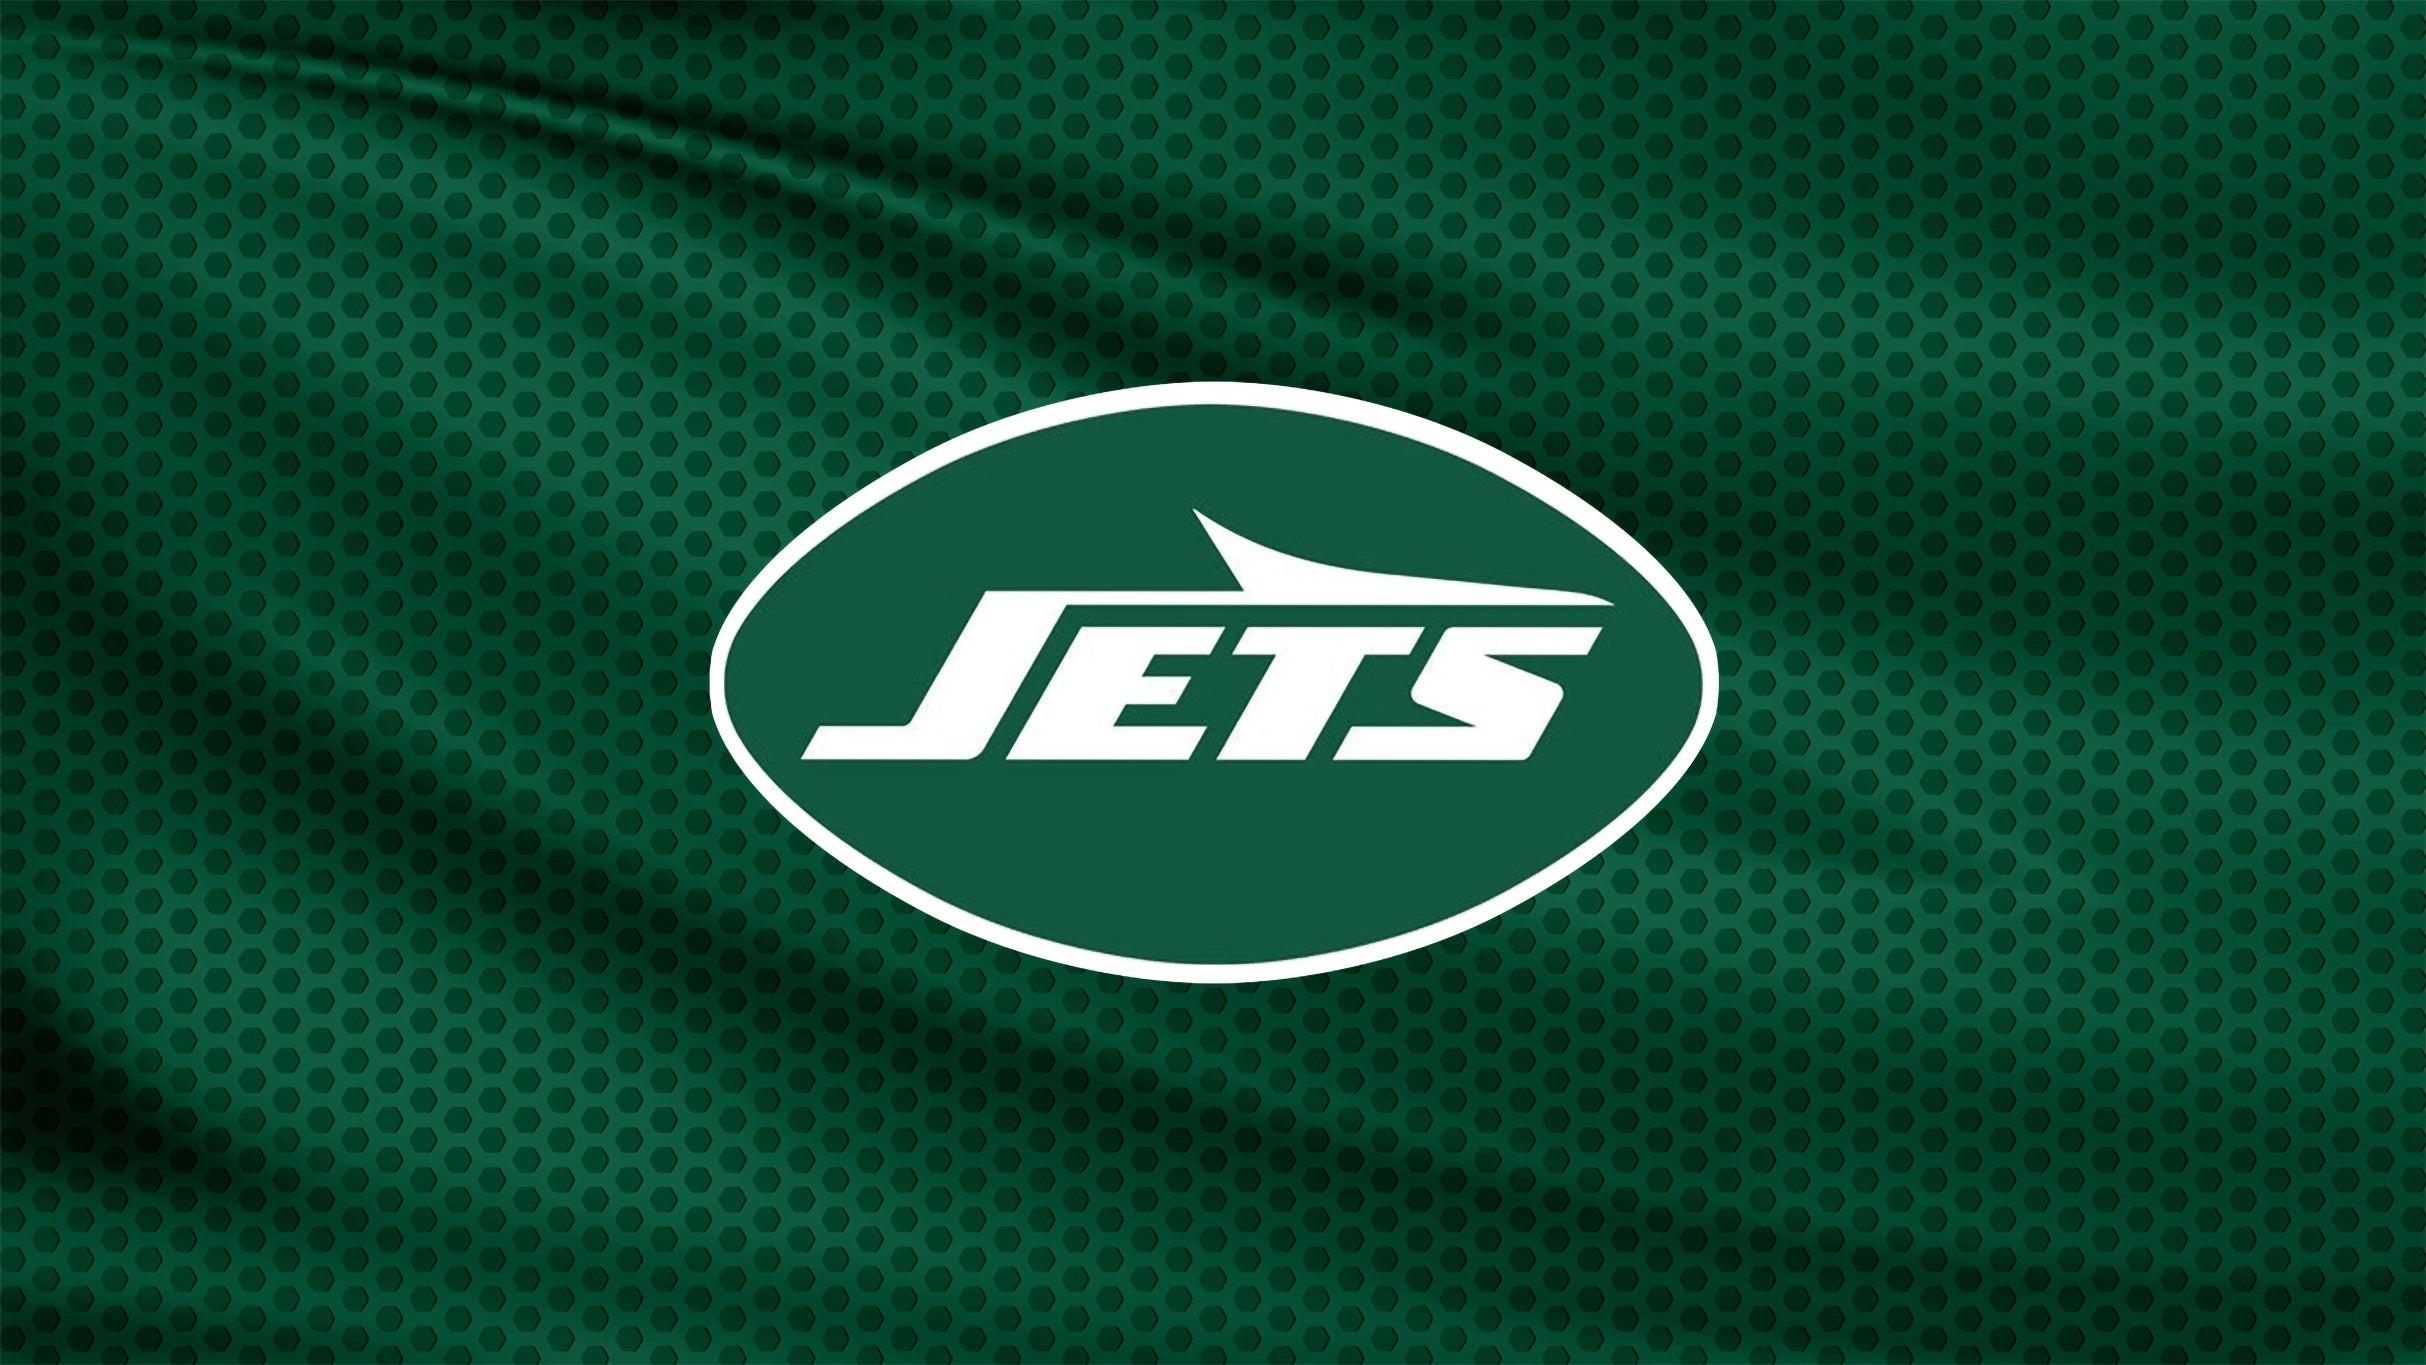 Preseason: New York Jets v. Washington Commanders in East Rutherford promo photo for STH presale offer code